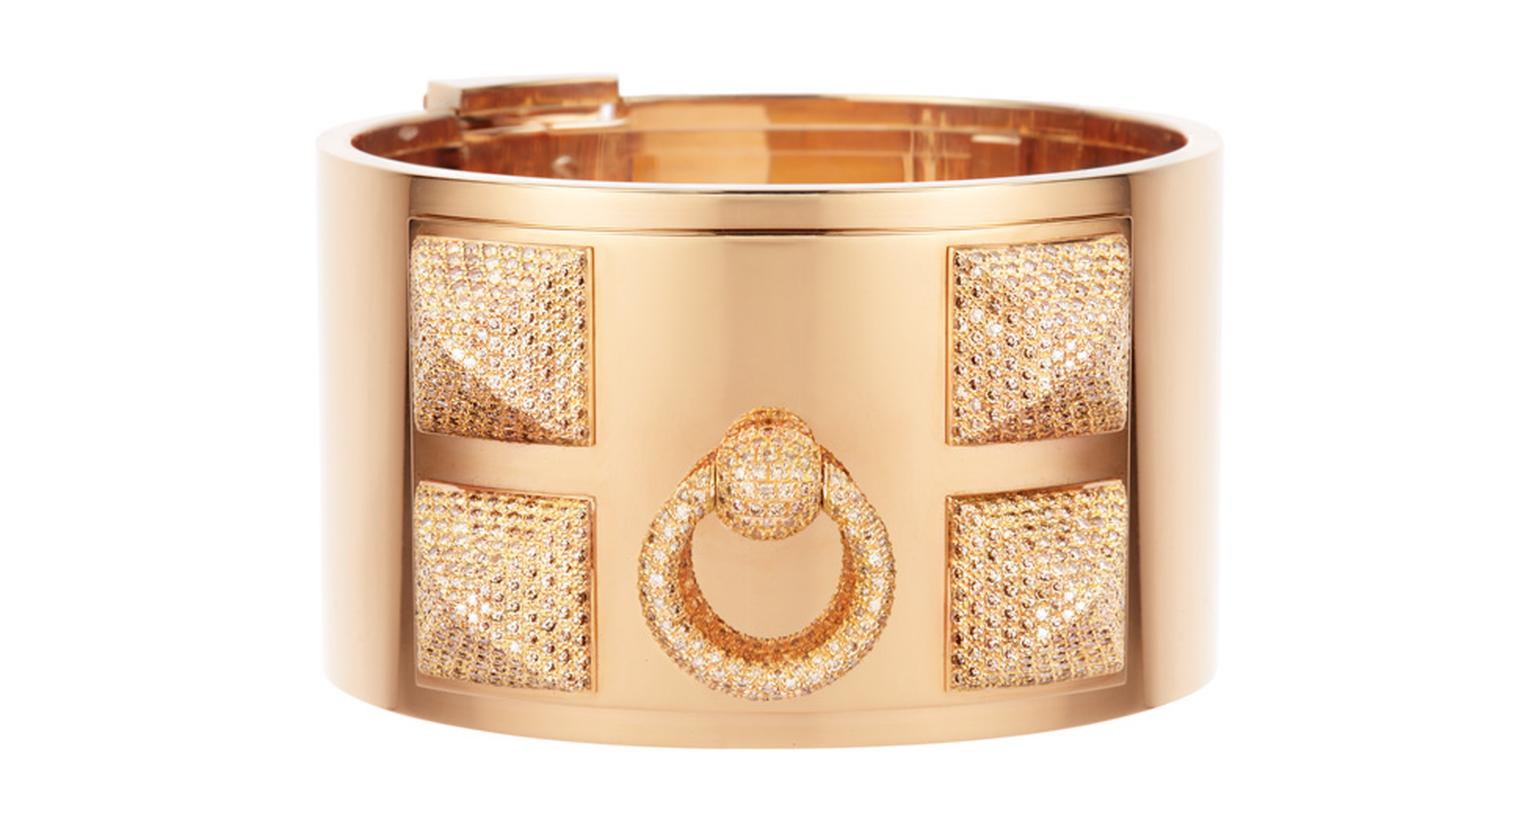 Hermès Collier de Chien gold and diamond cuff